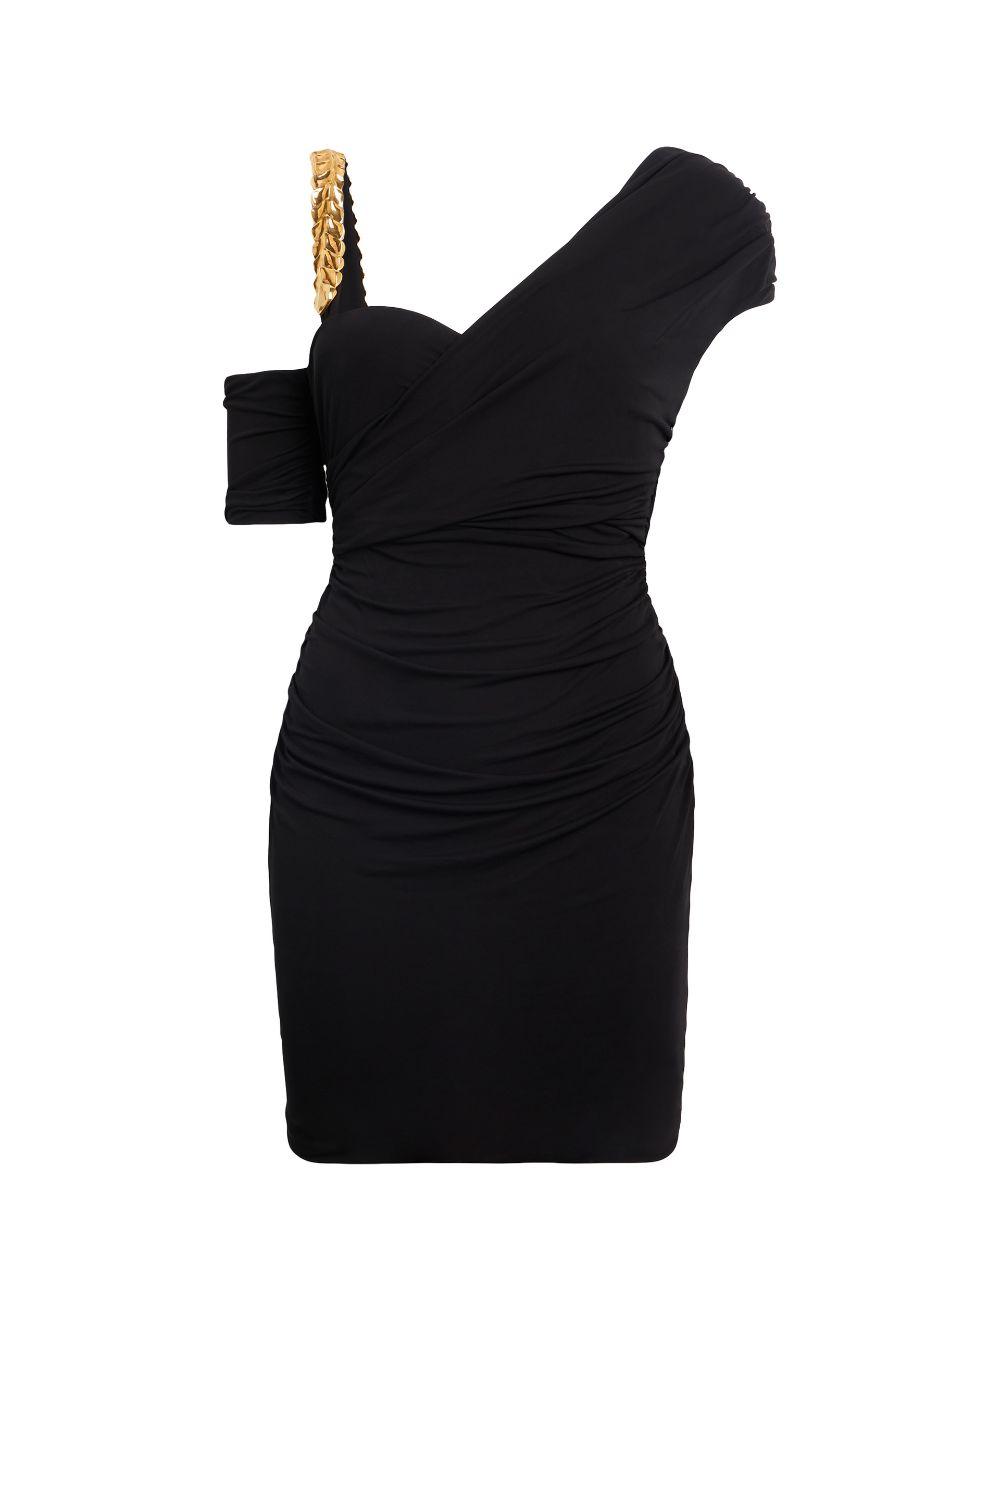 Roberto Cavalli Chain Strap Dress in Black | Lyst